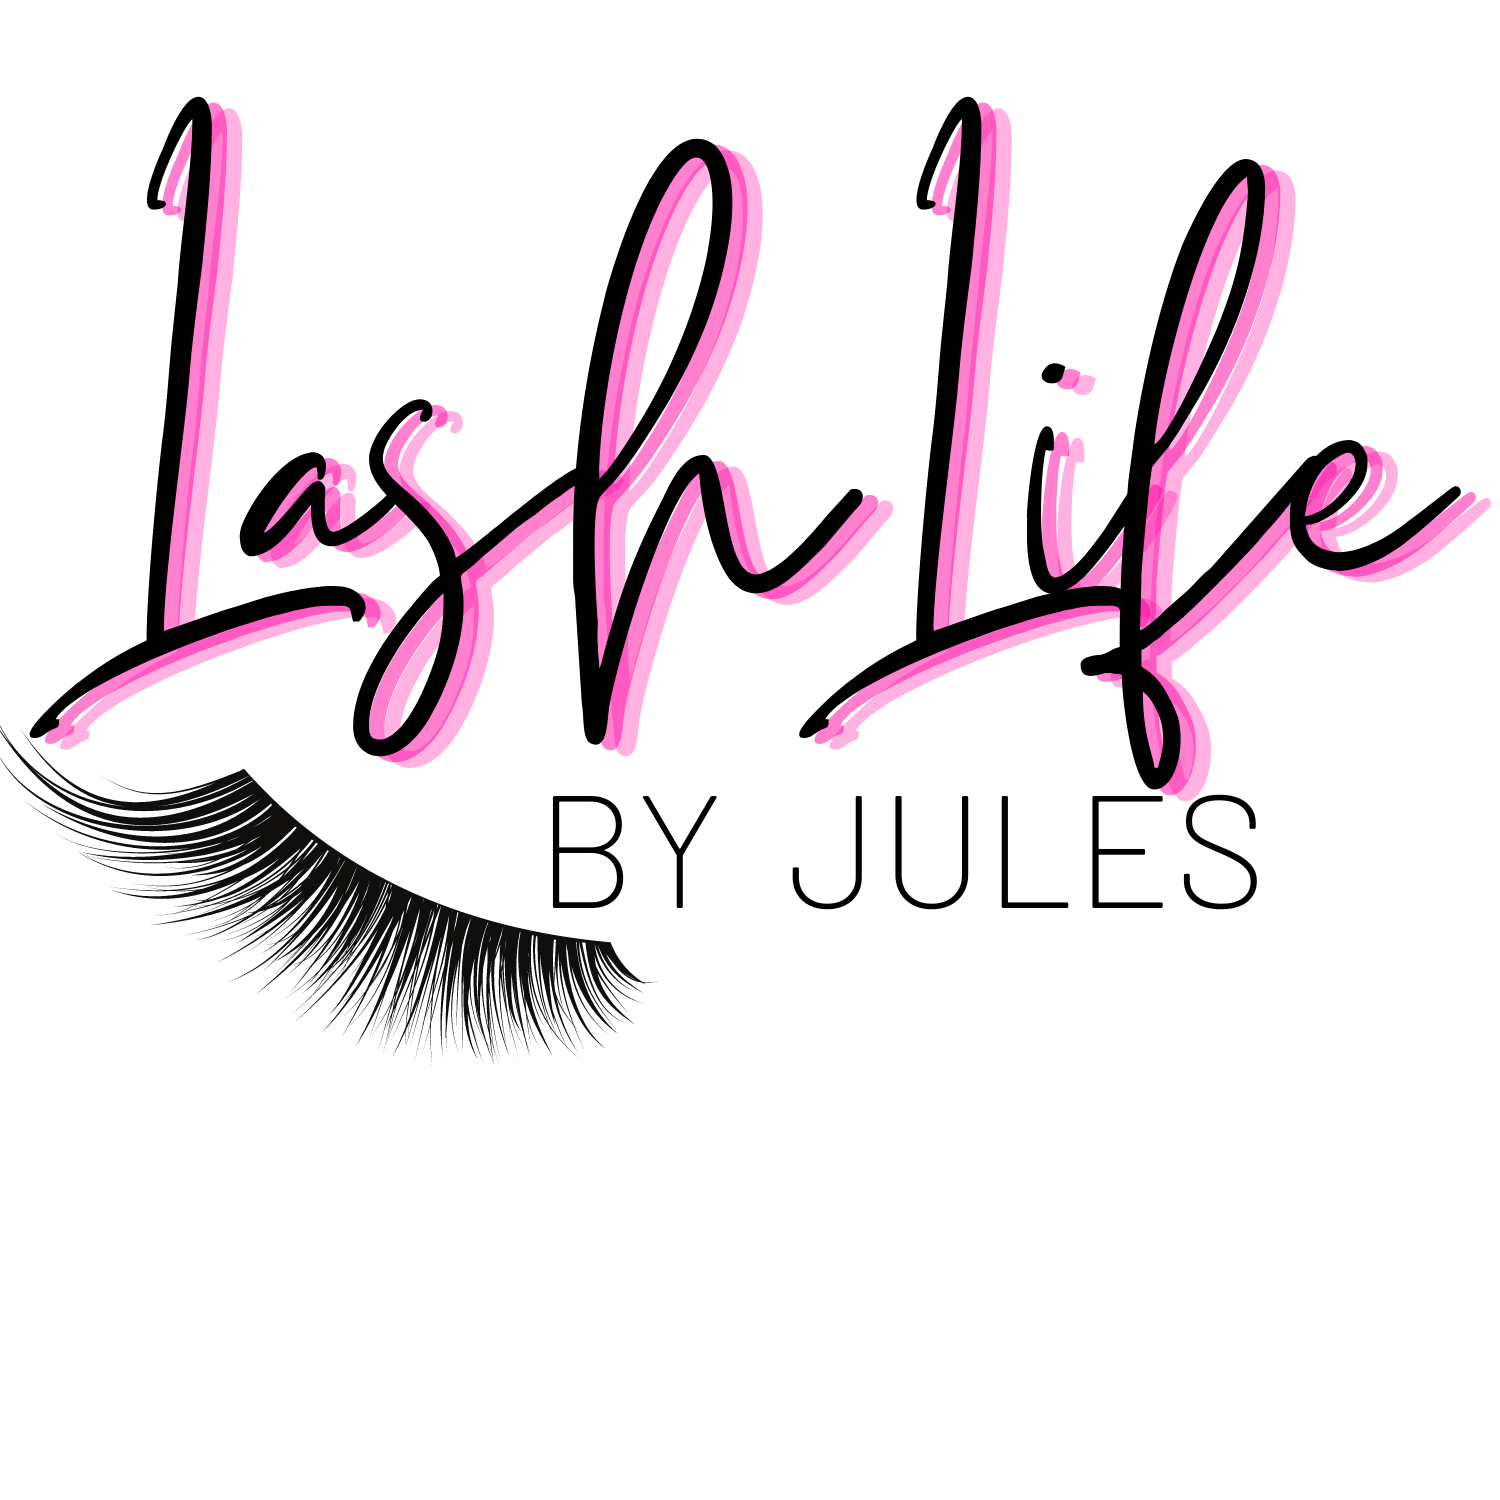 LashLife by Jules